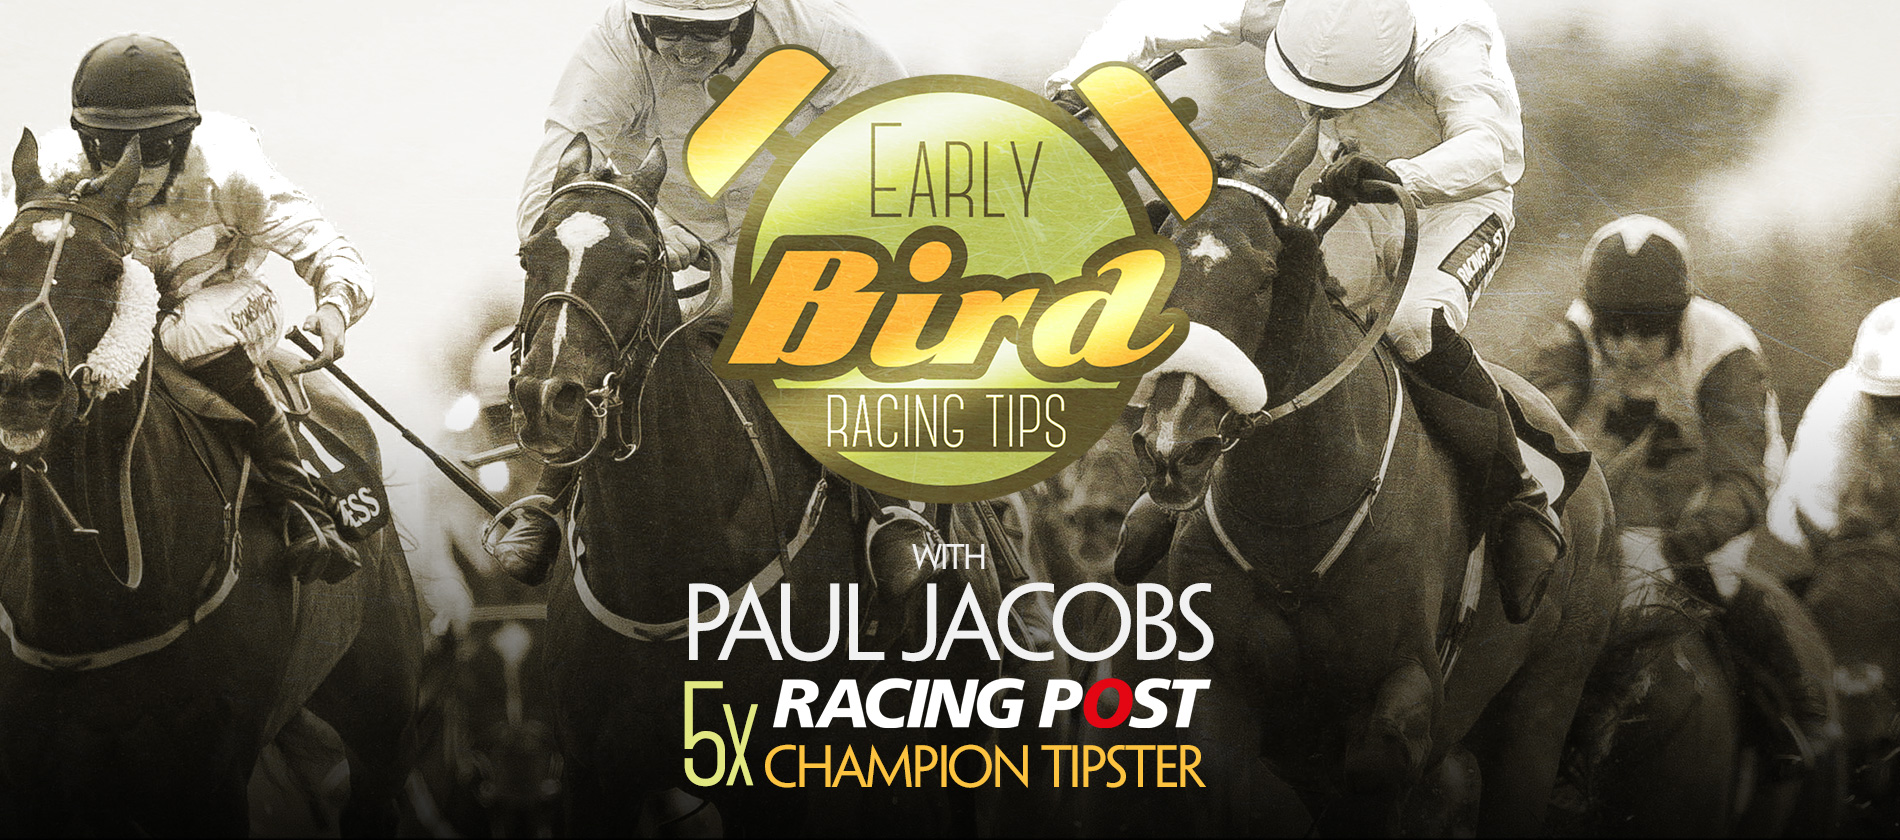 Paul Jacob Early Bird